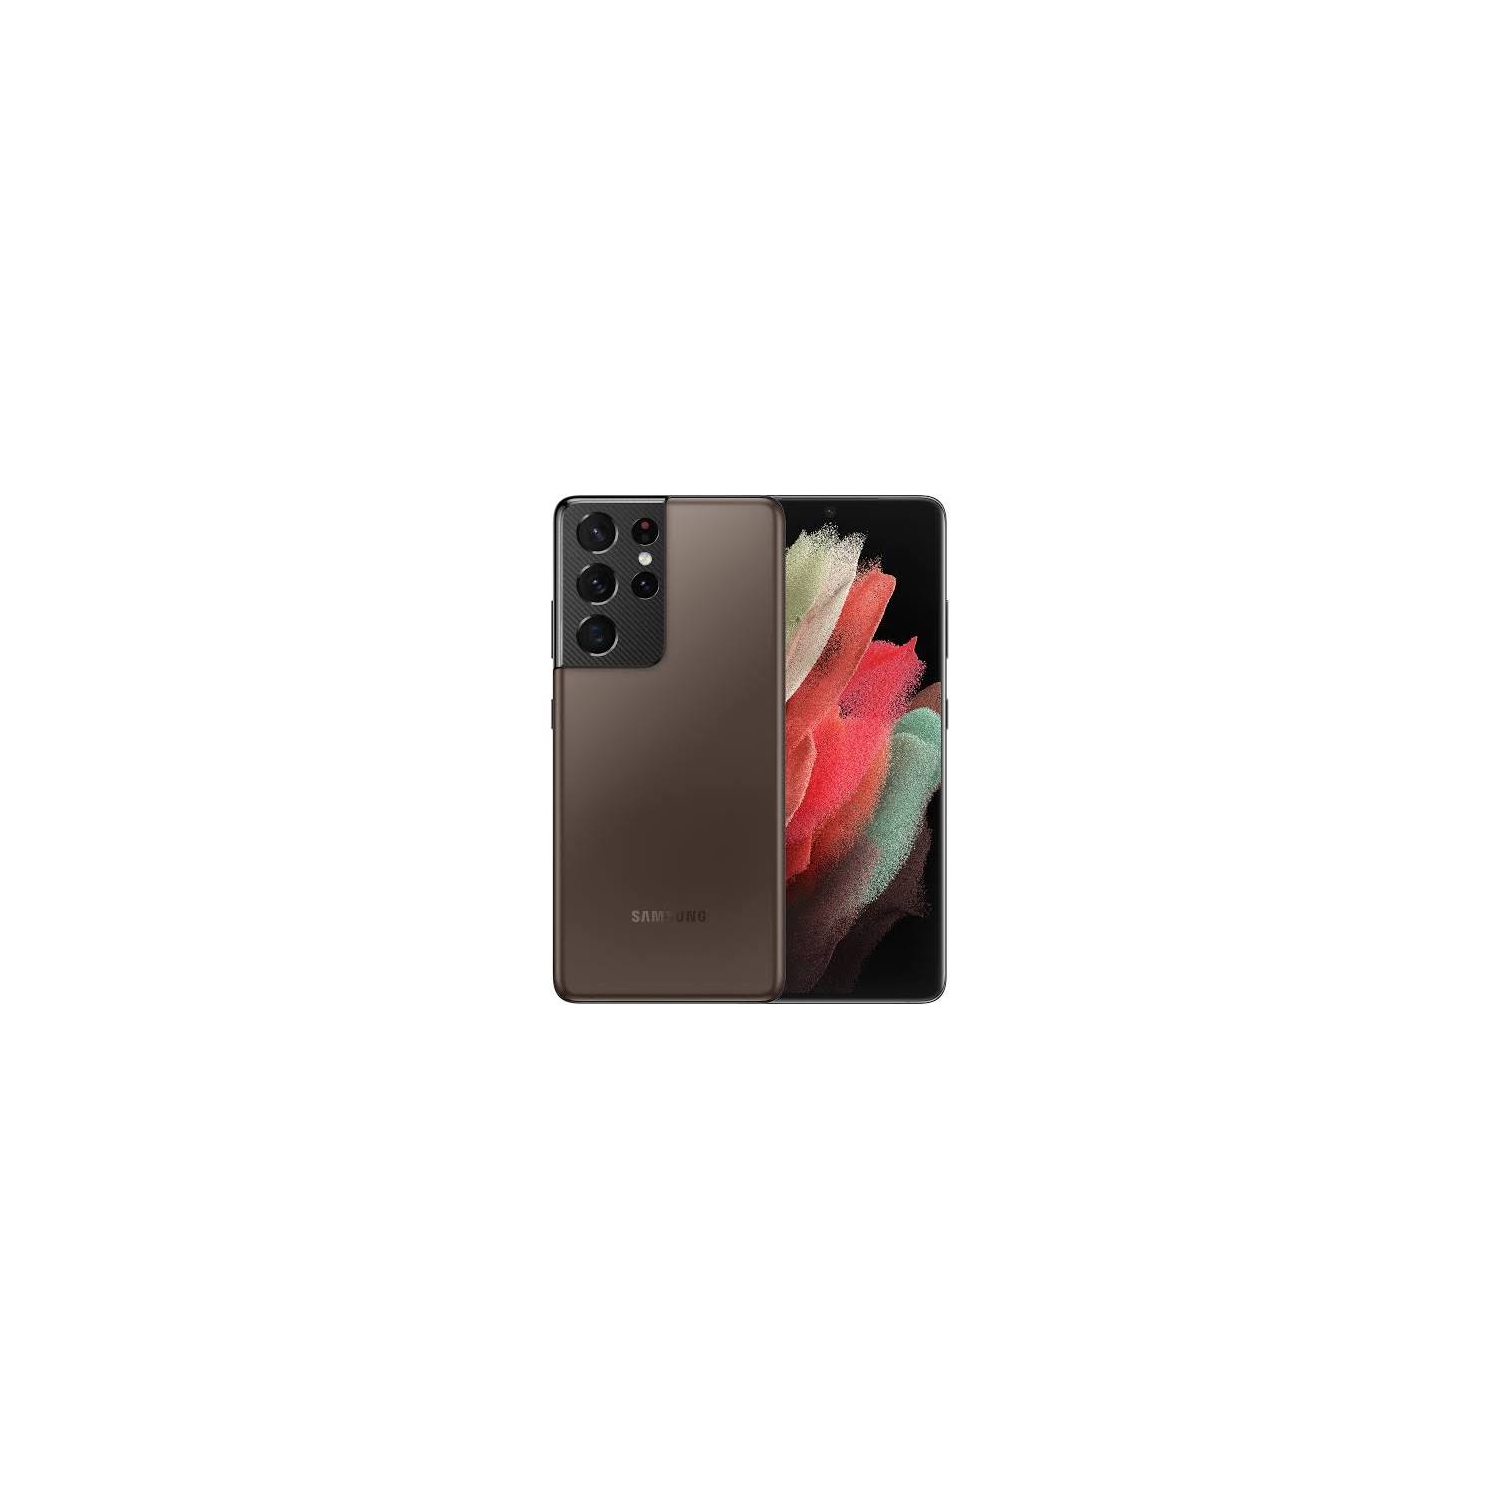 Refurbished (Excellent) - Samsung Galaxy S21 Ultra 5G 256GB - Phantom Brown - Unlocked - Certified Refurbished